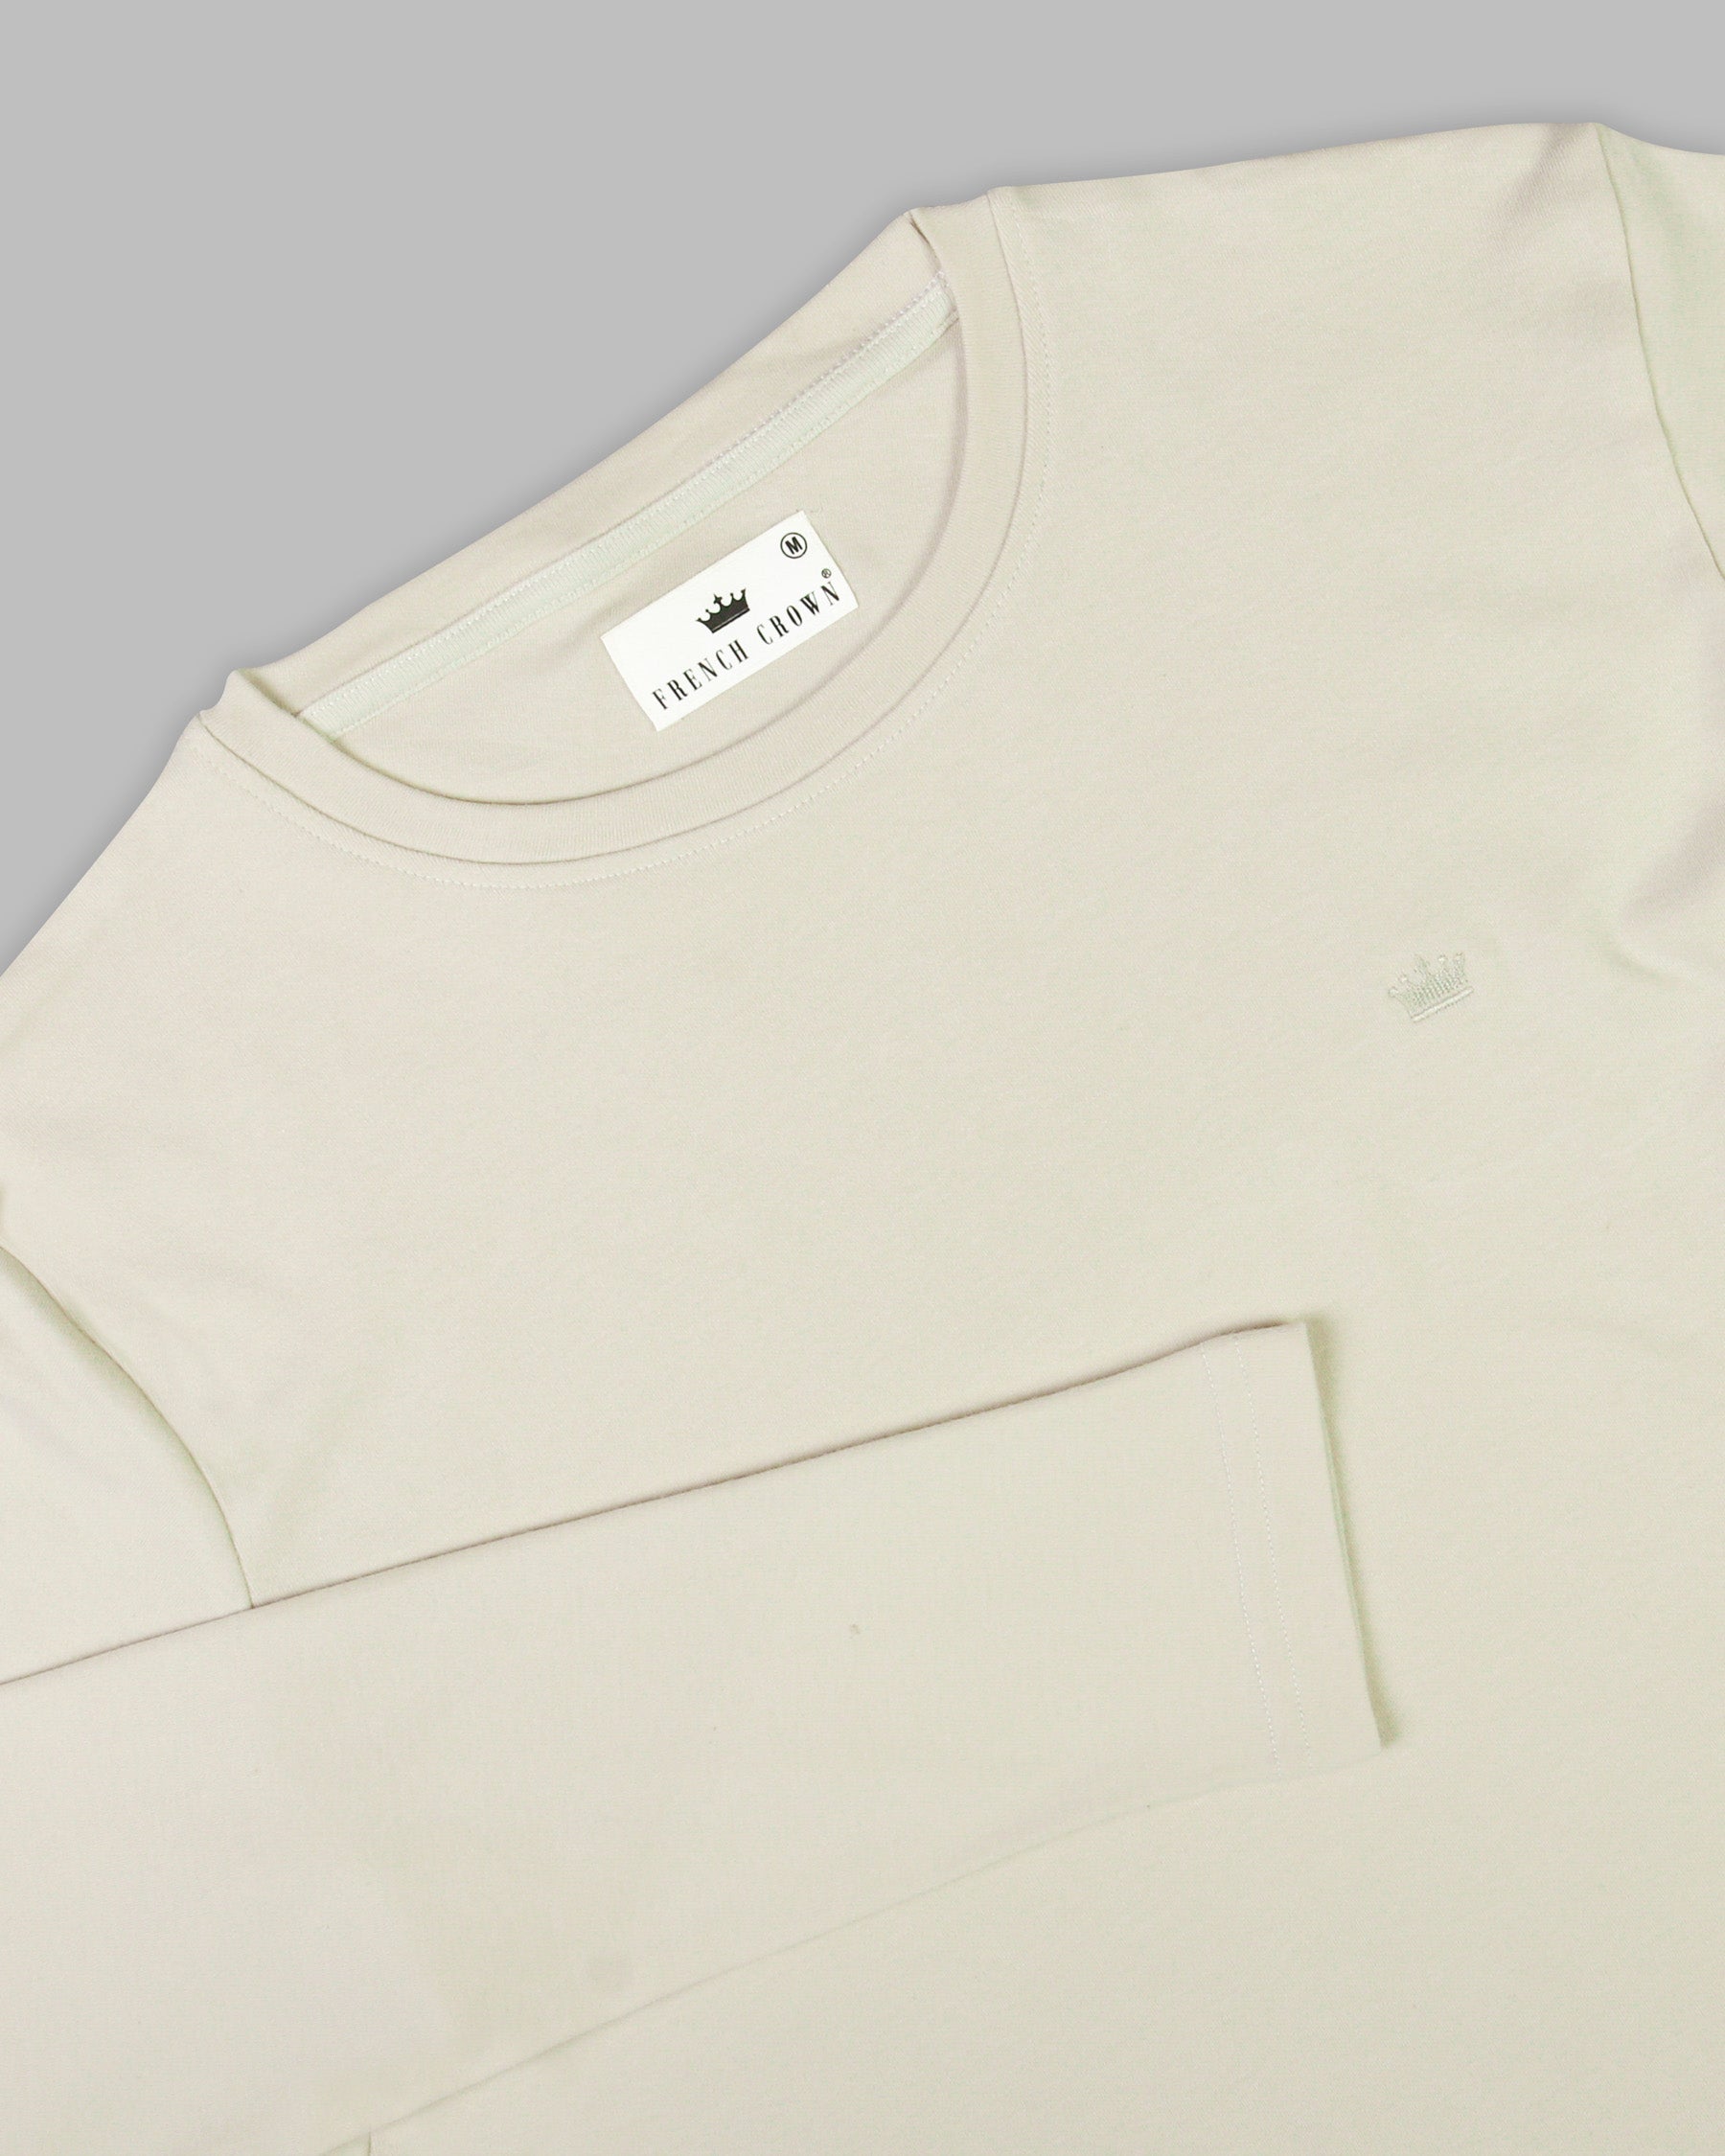 Ivory Full-Sleeve Super soft Organic Cotton Jersey T-shirt TS120-S, TS120-M, TS120-L, TS120-XL, TS120-XXL